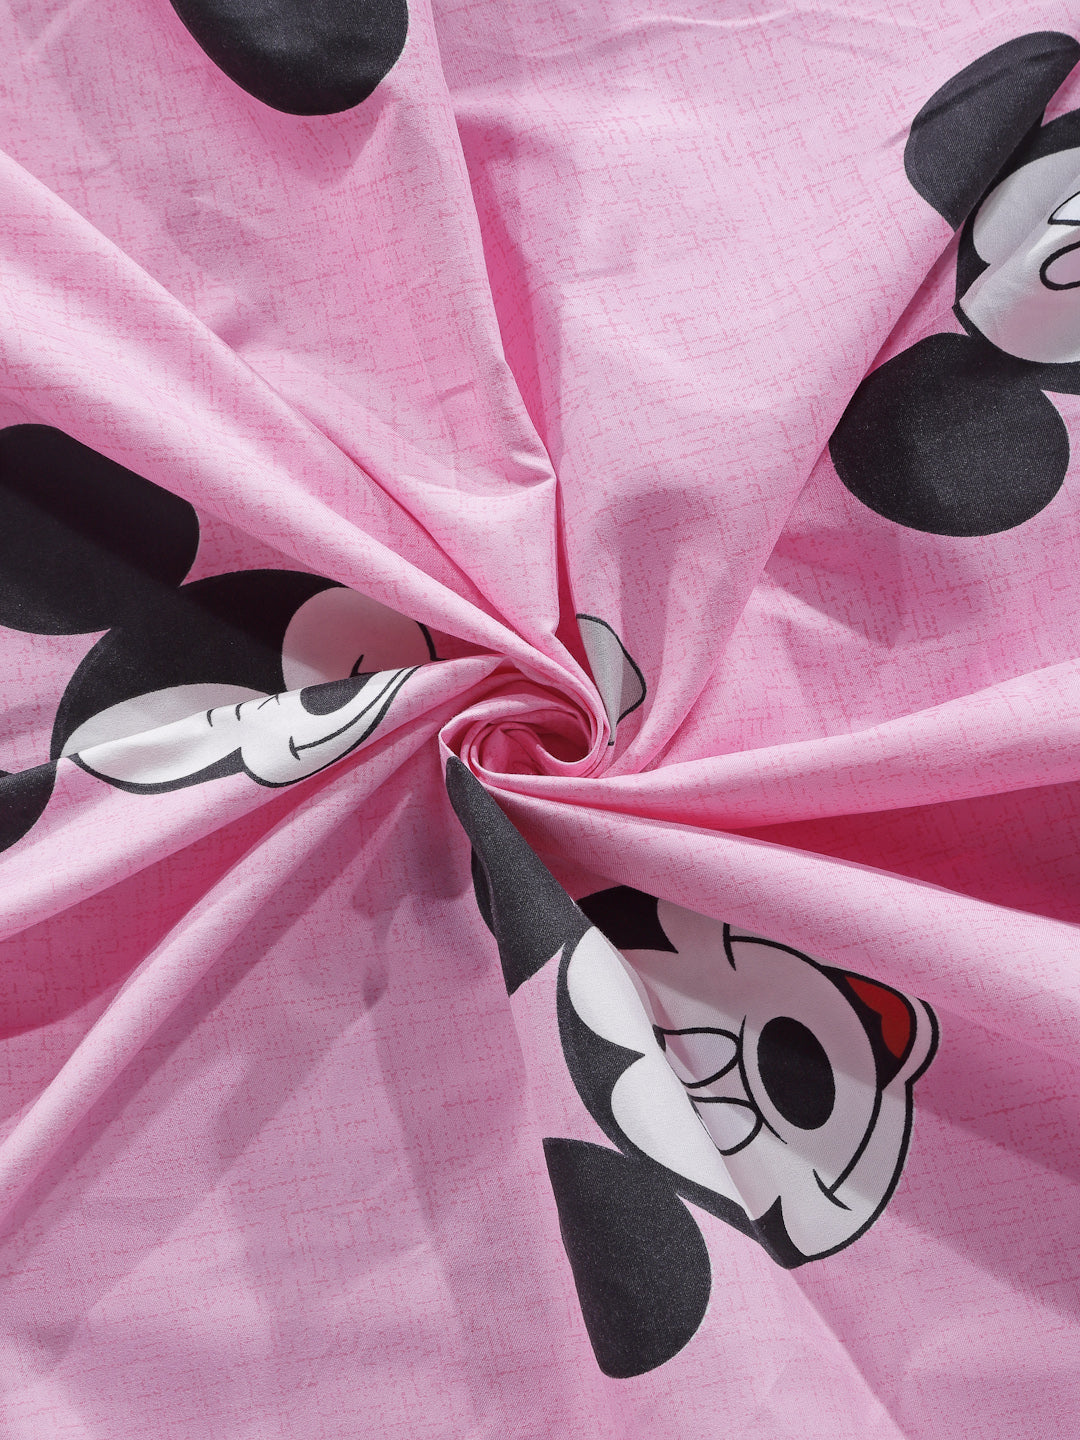 Arrabi Pink Cartoon TC Cotton Blend Single Size Bedsheet with 1 Pillow Cover (220 X 150 cm)